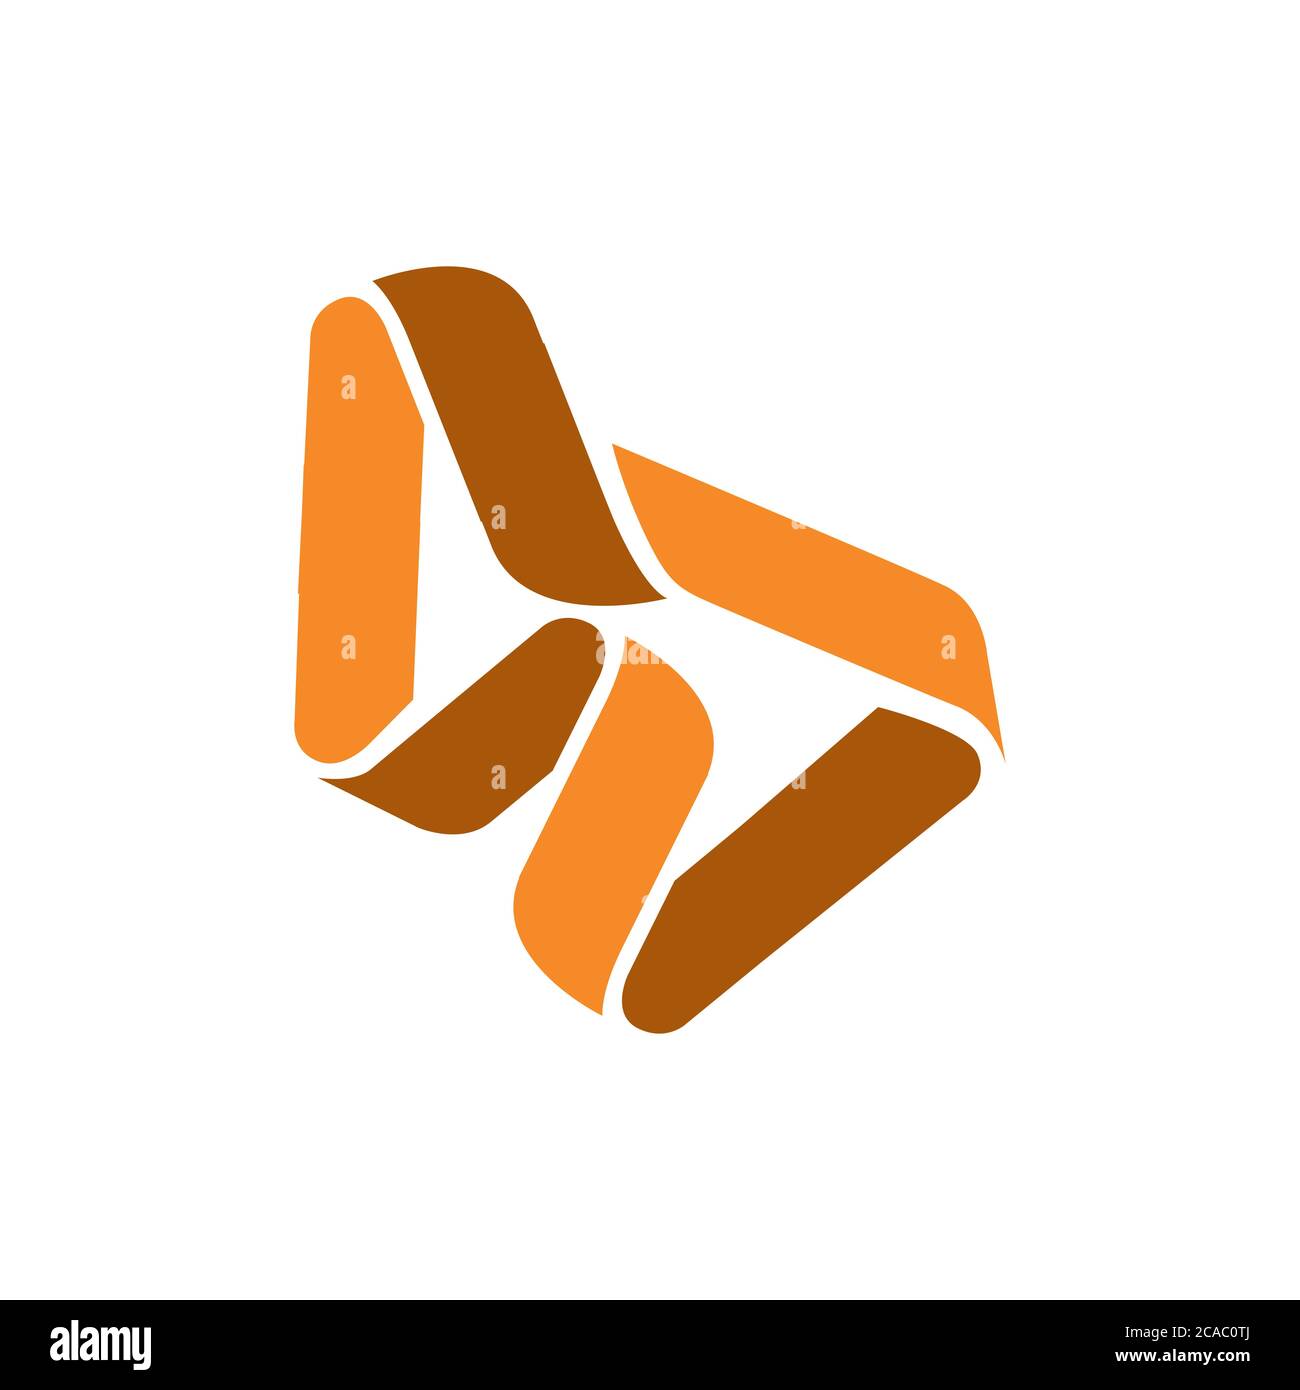 new concept of infinity logo design vector illustrations eps.10 Stock Vector